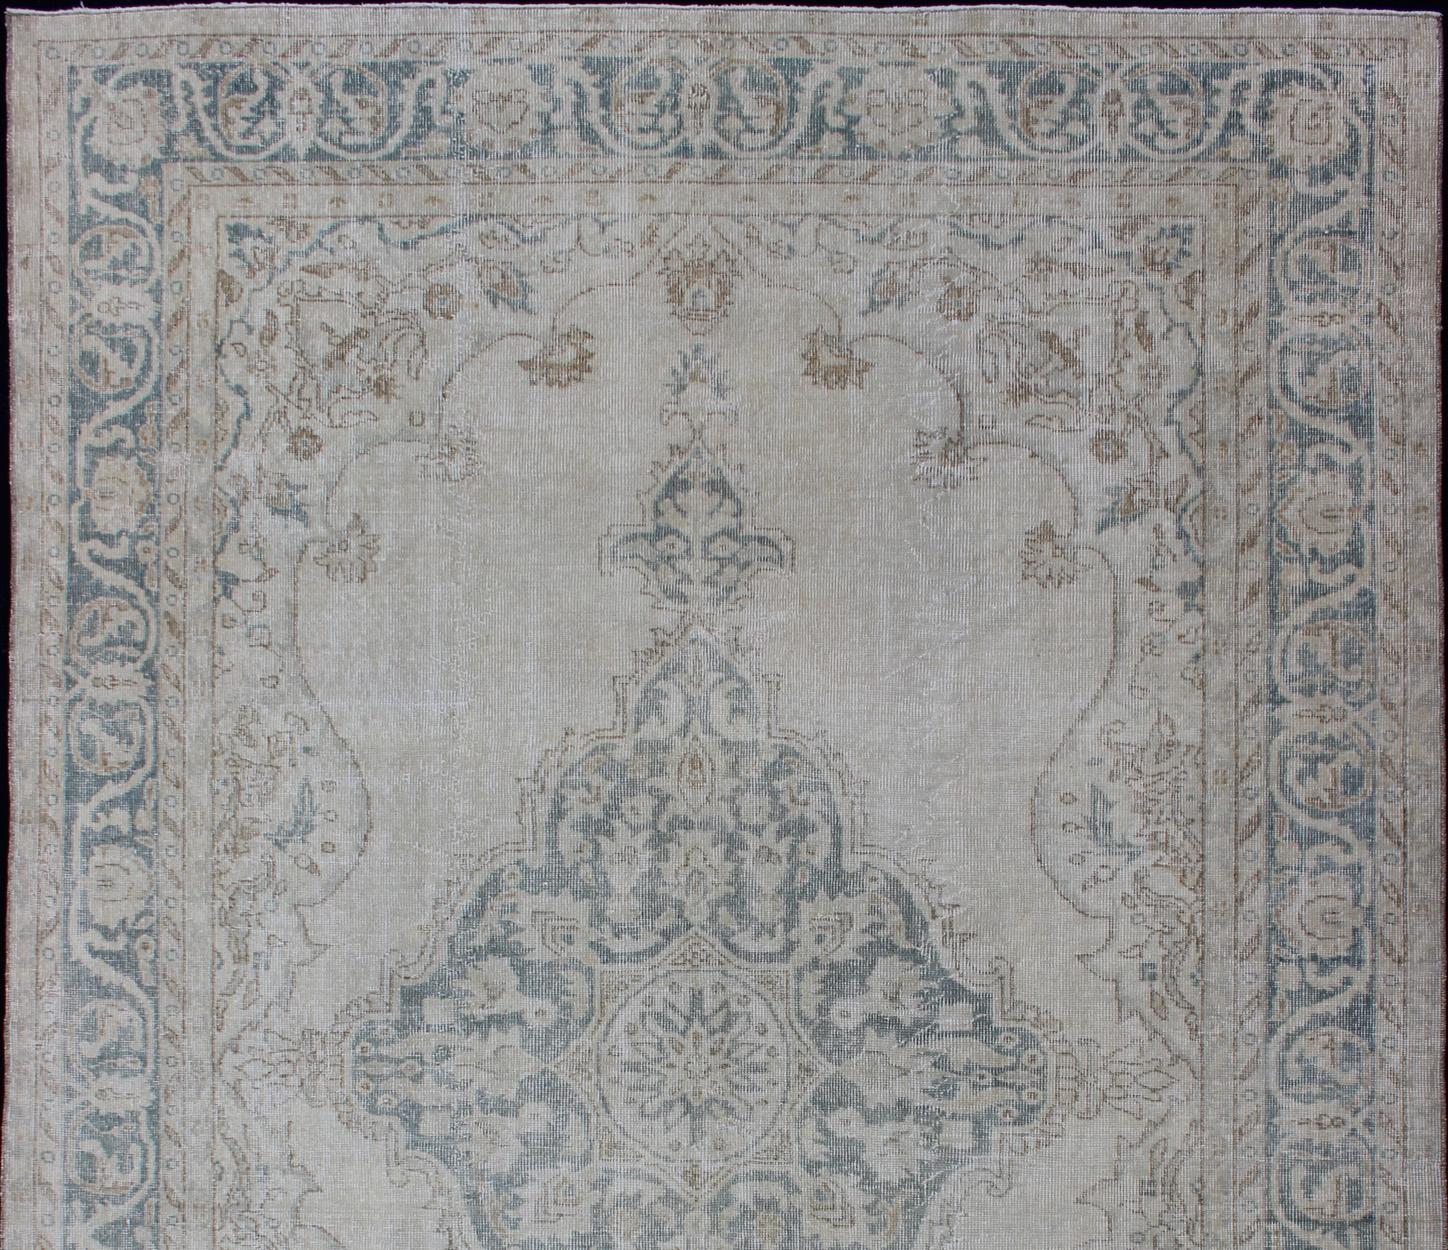 Taupe, cream and blue Oushak rug vintage from Turkey with medallion design of etched motifs, Keivan Woven Arts/rug /EN-179688, country of origin / type: Turkey / Oushak, circa 1950.

Measures: 6'10 x 10'3.

This striking vintage Turkish Oushak rug